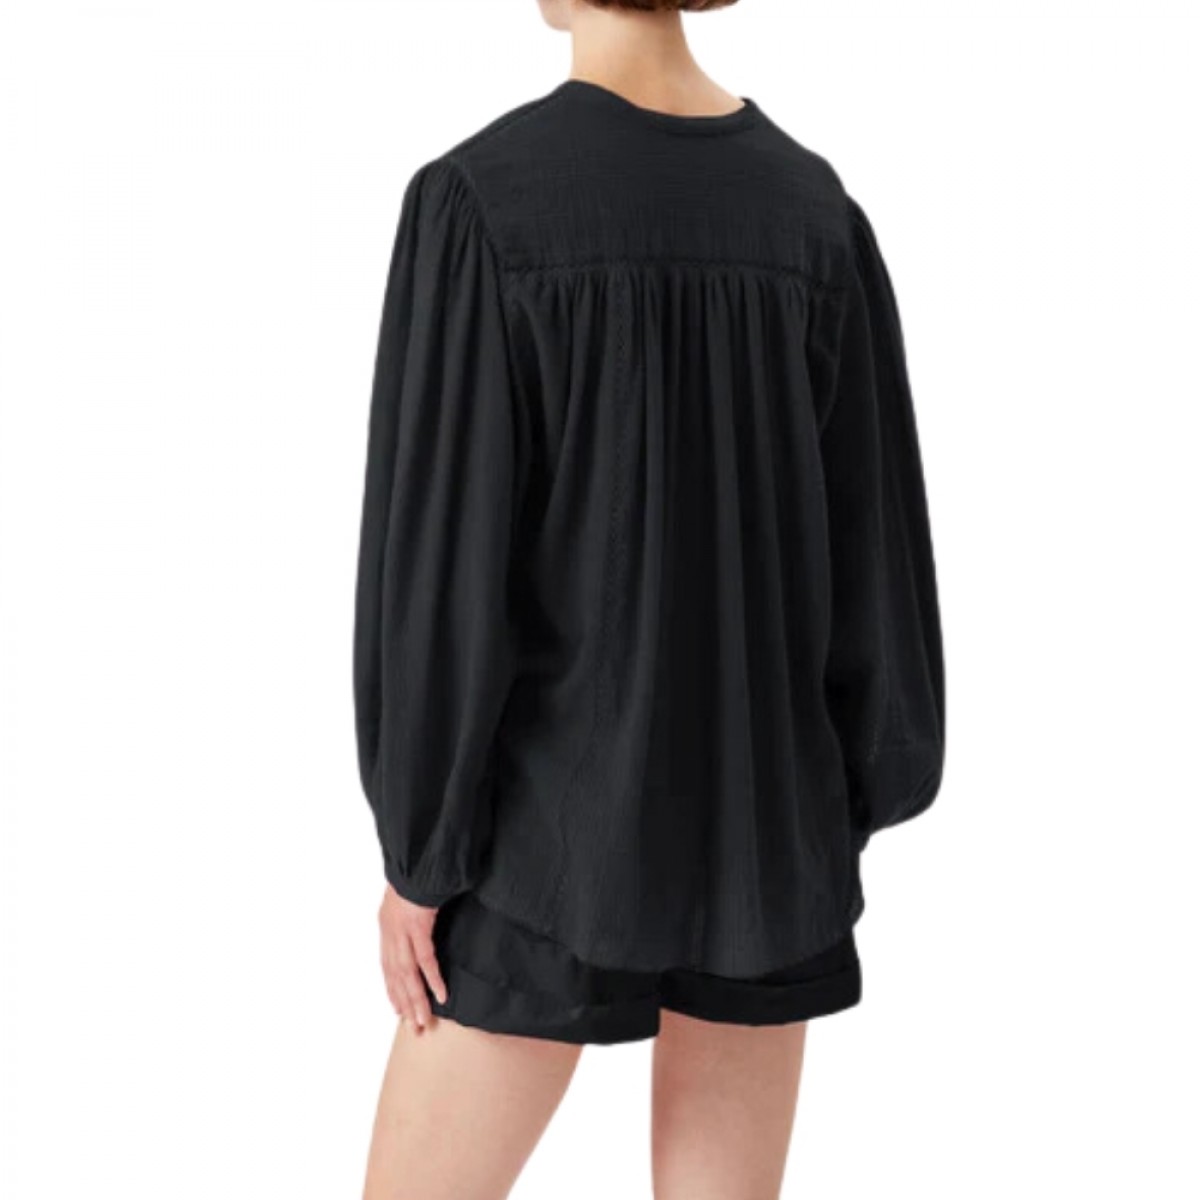 leonard cotton and linen top - black . model ryg